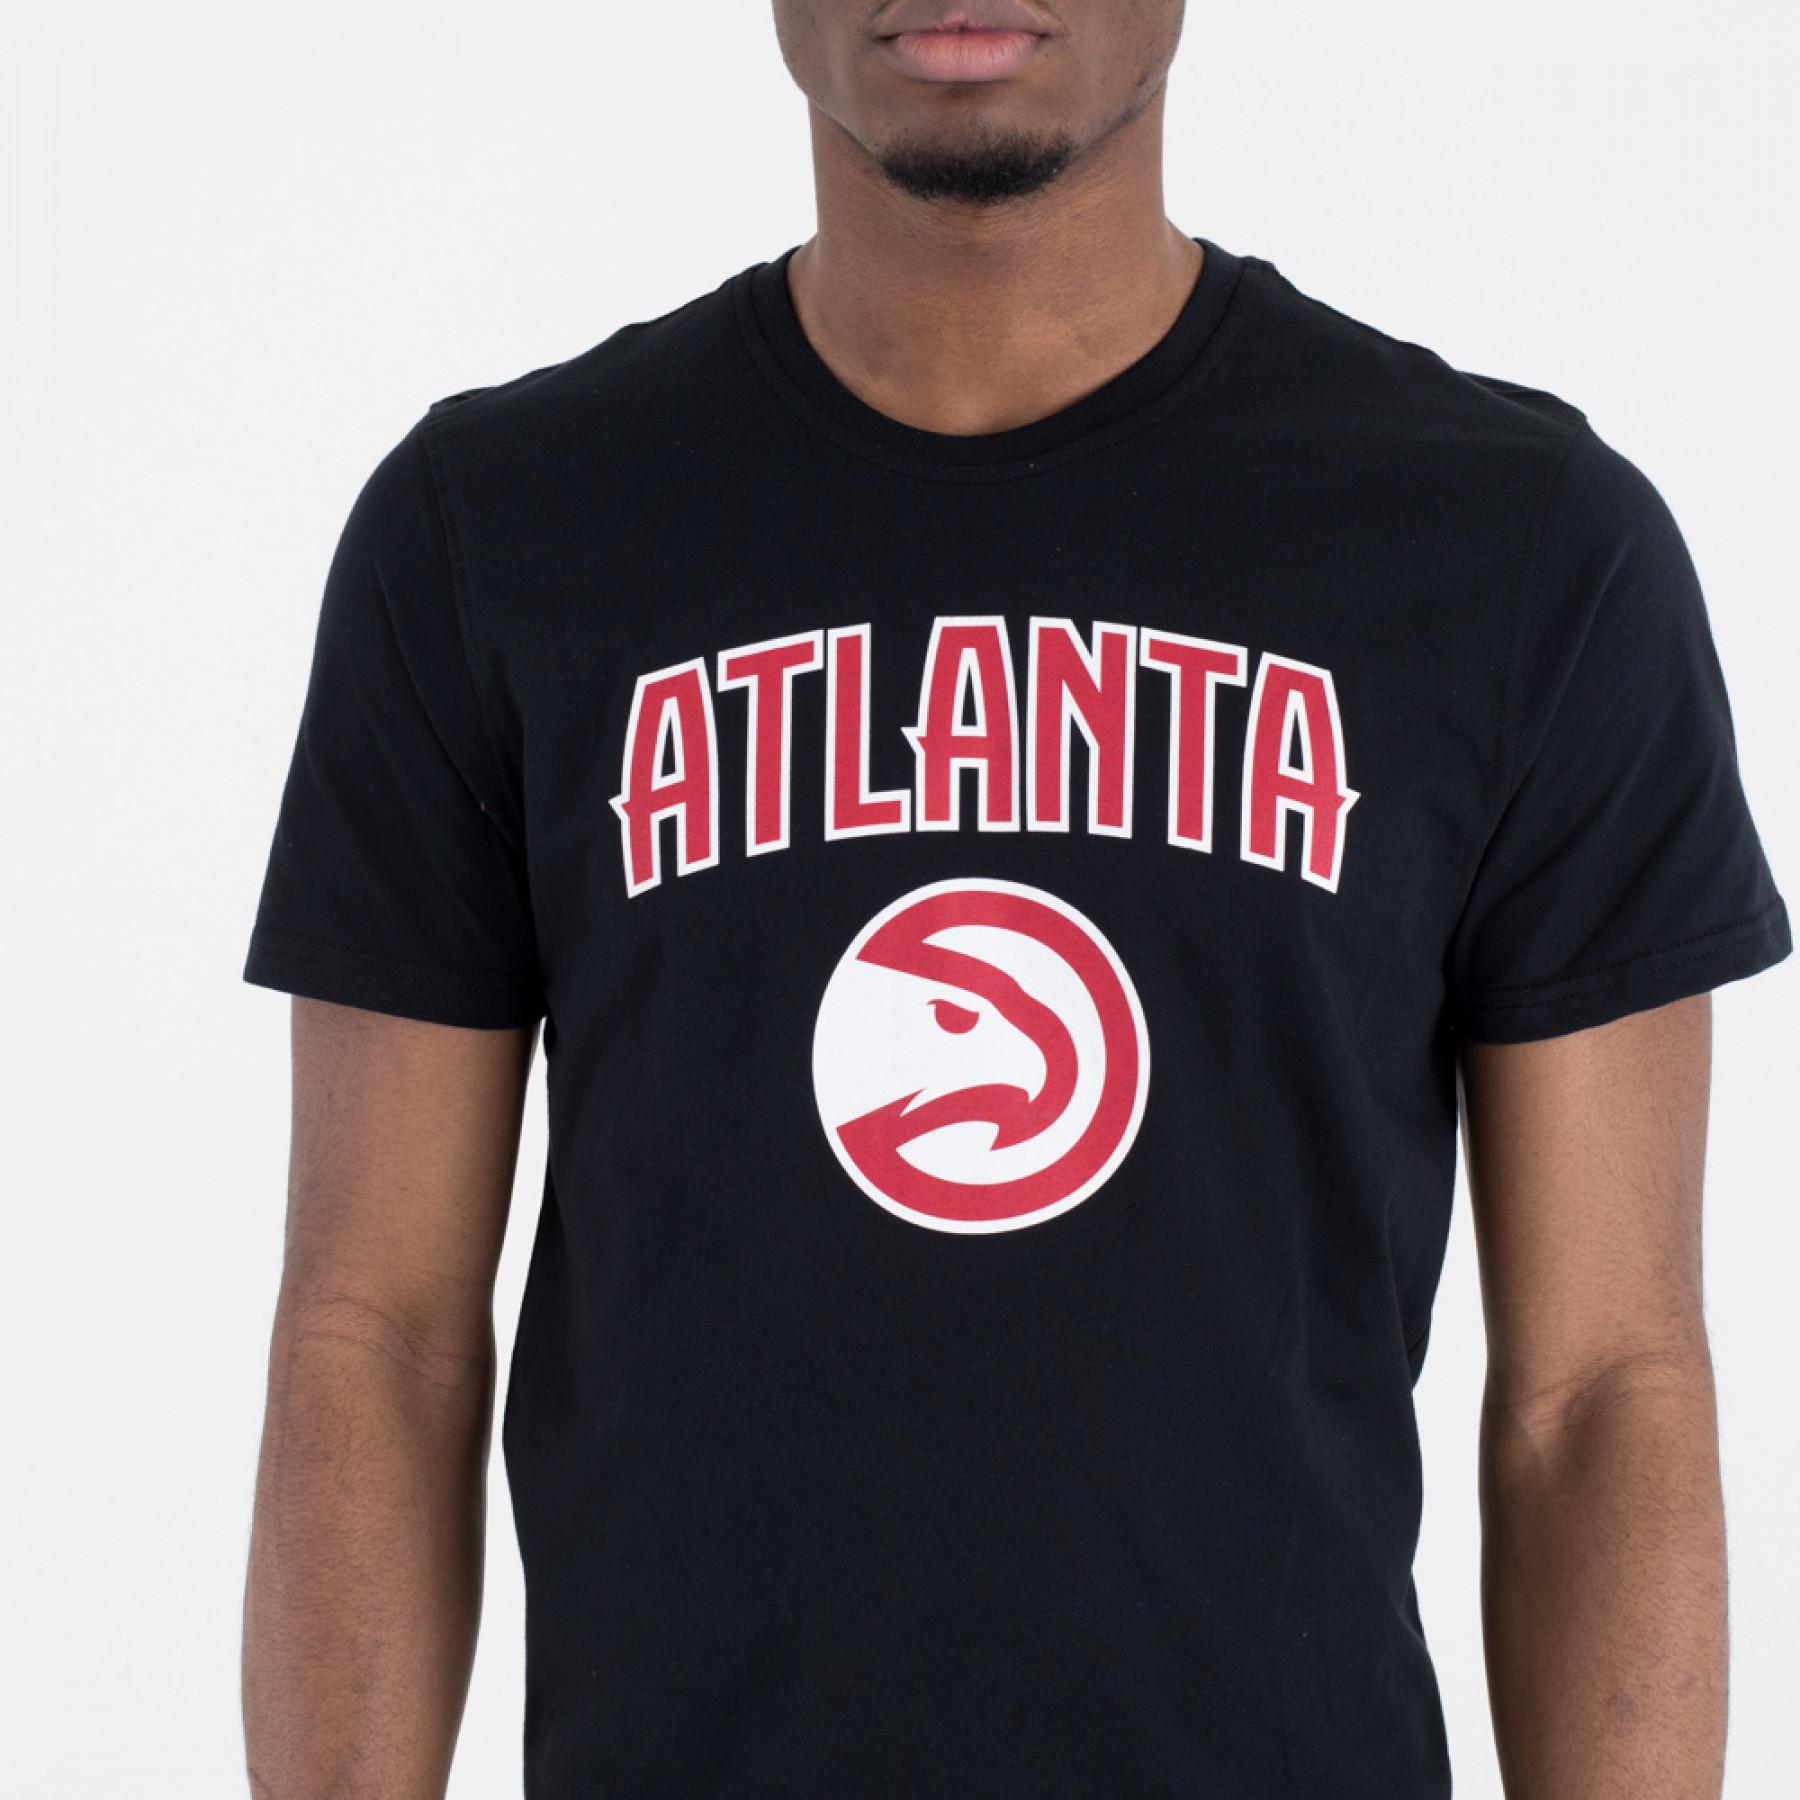  New EraT - s h i r t   logo Atlanta Hawks